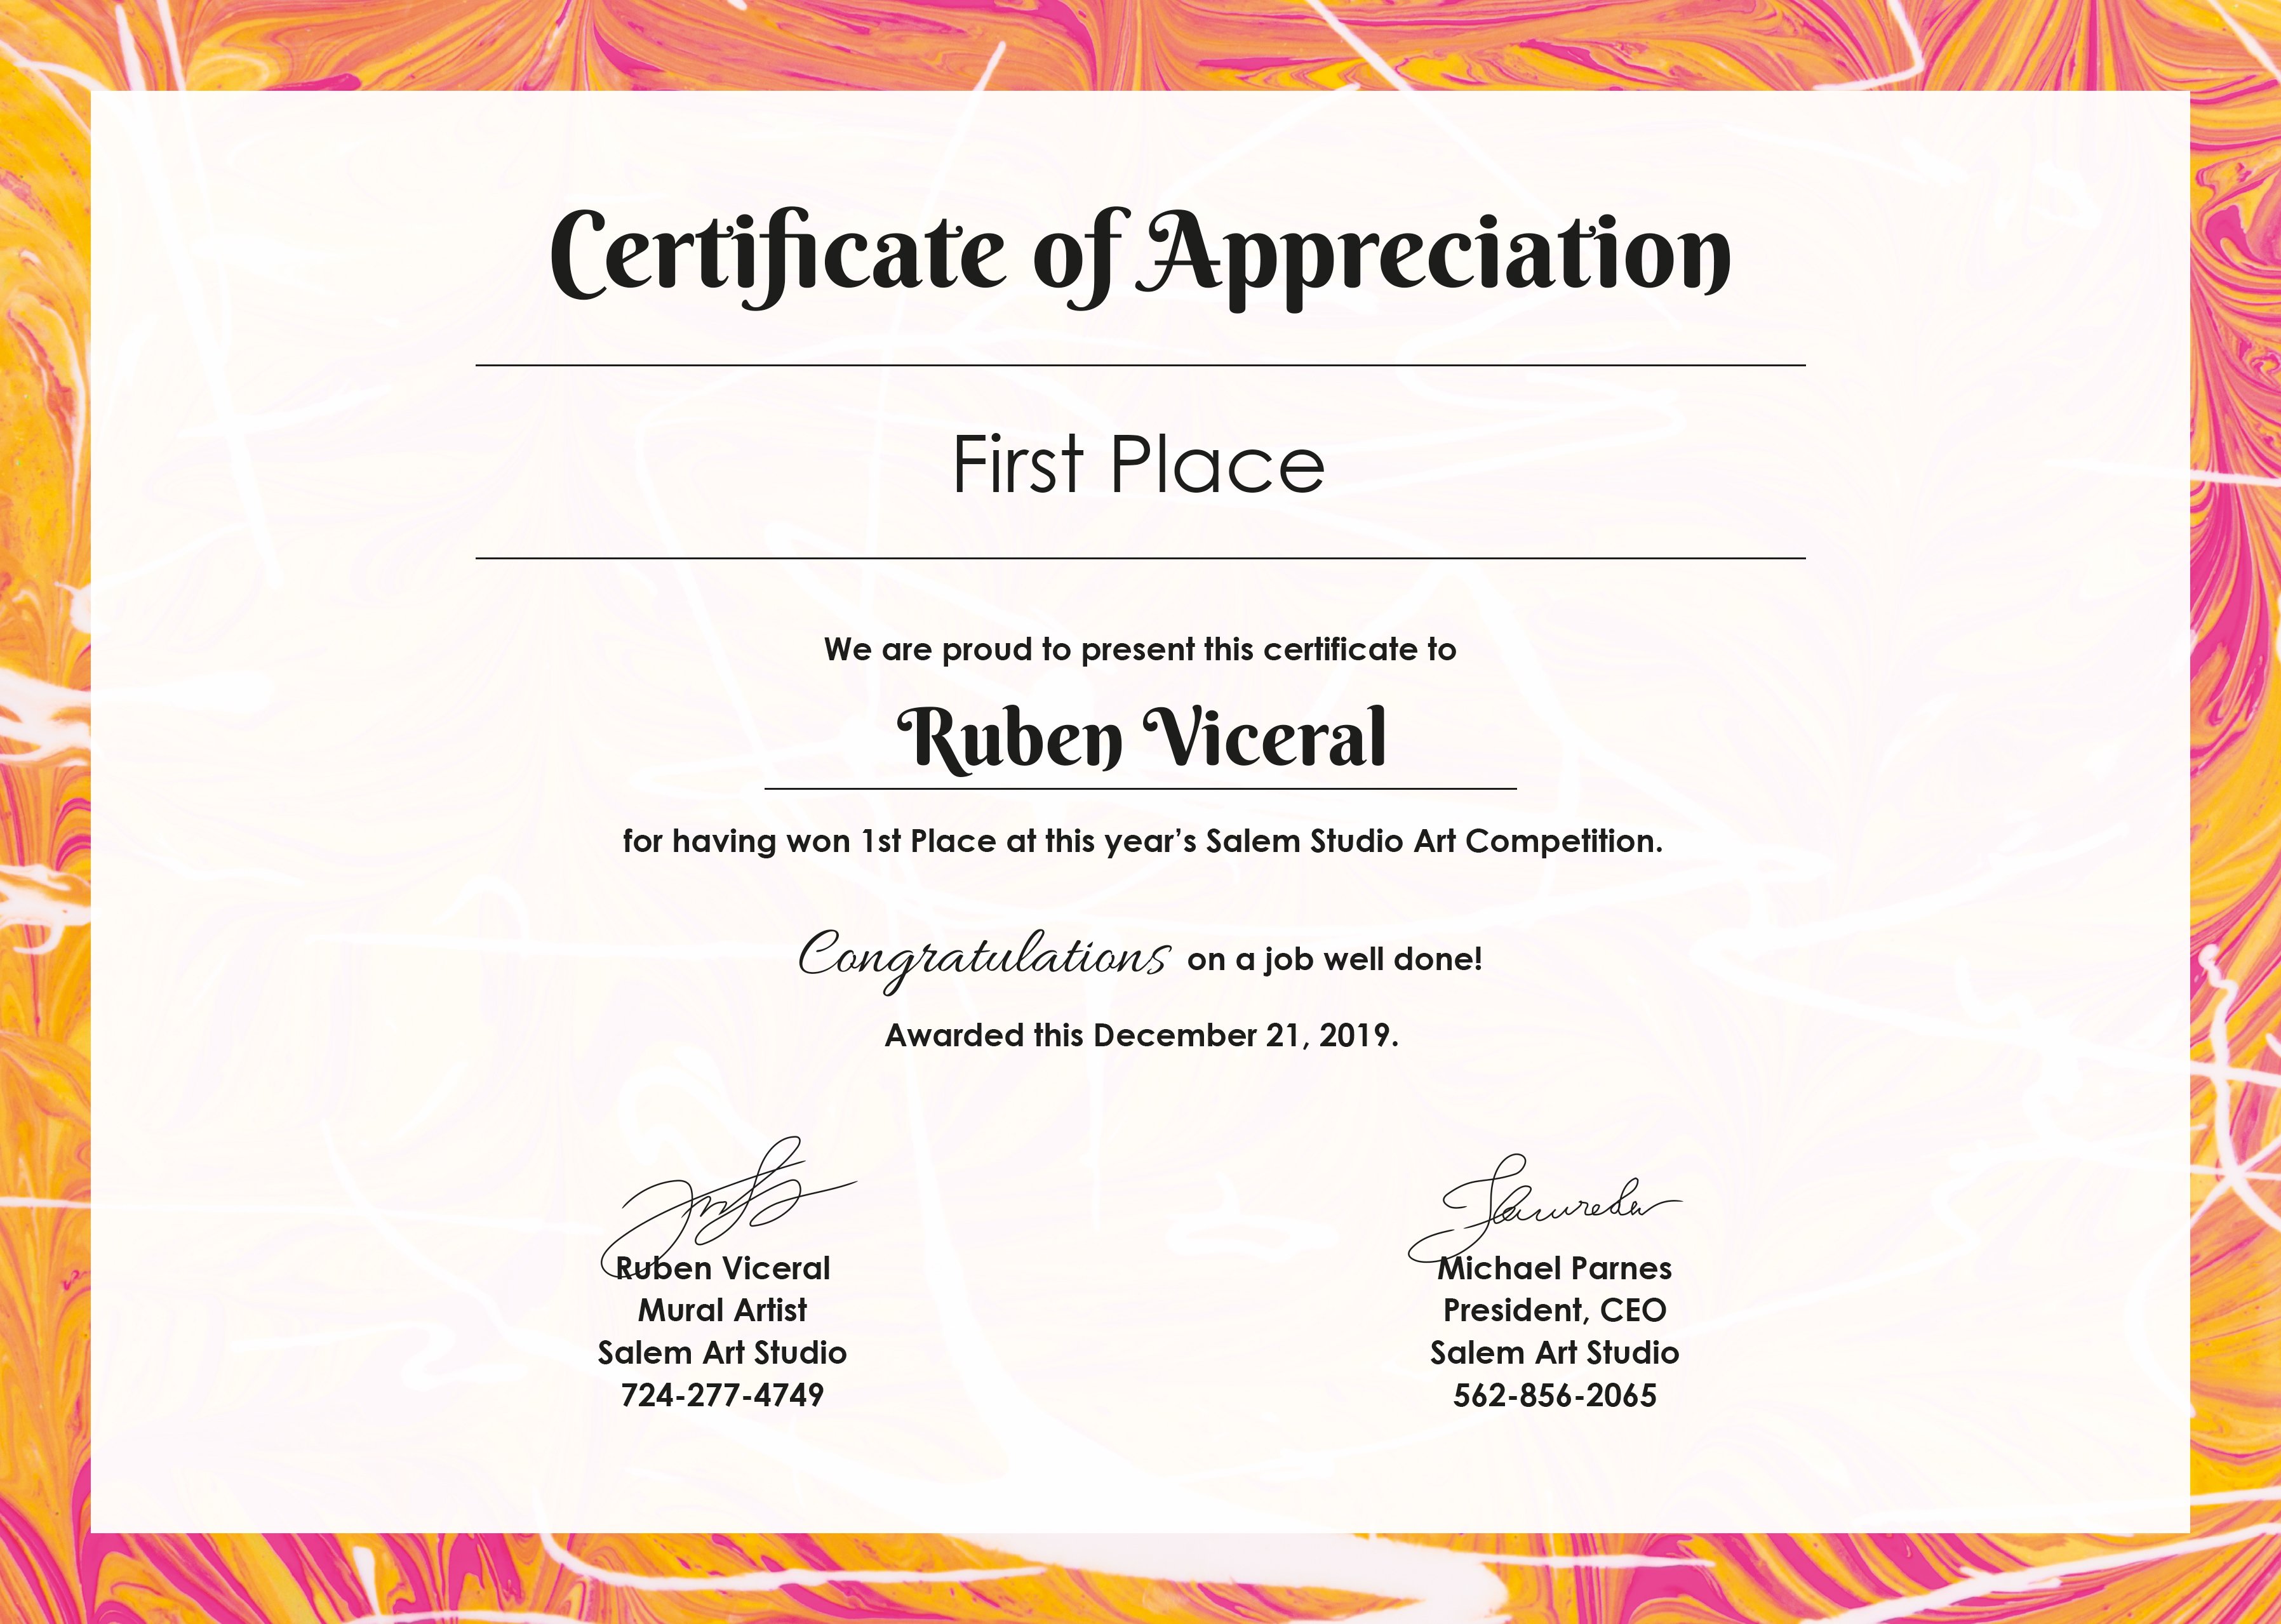 Free Appreciation Certificate Template In Adobe Photoshop Illustrator